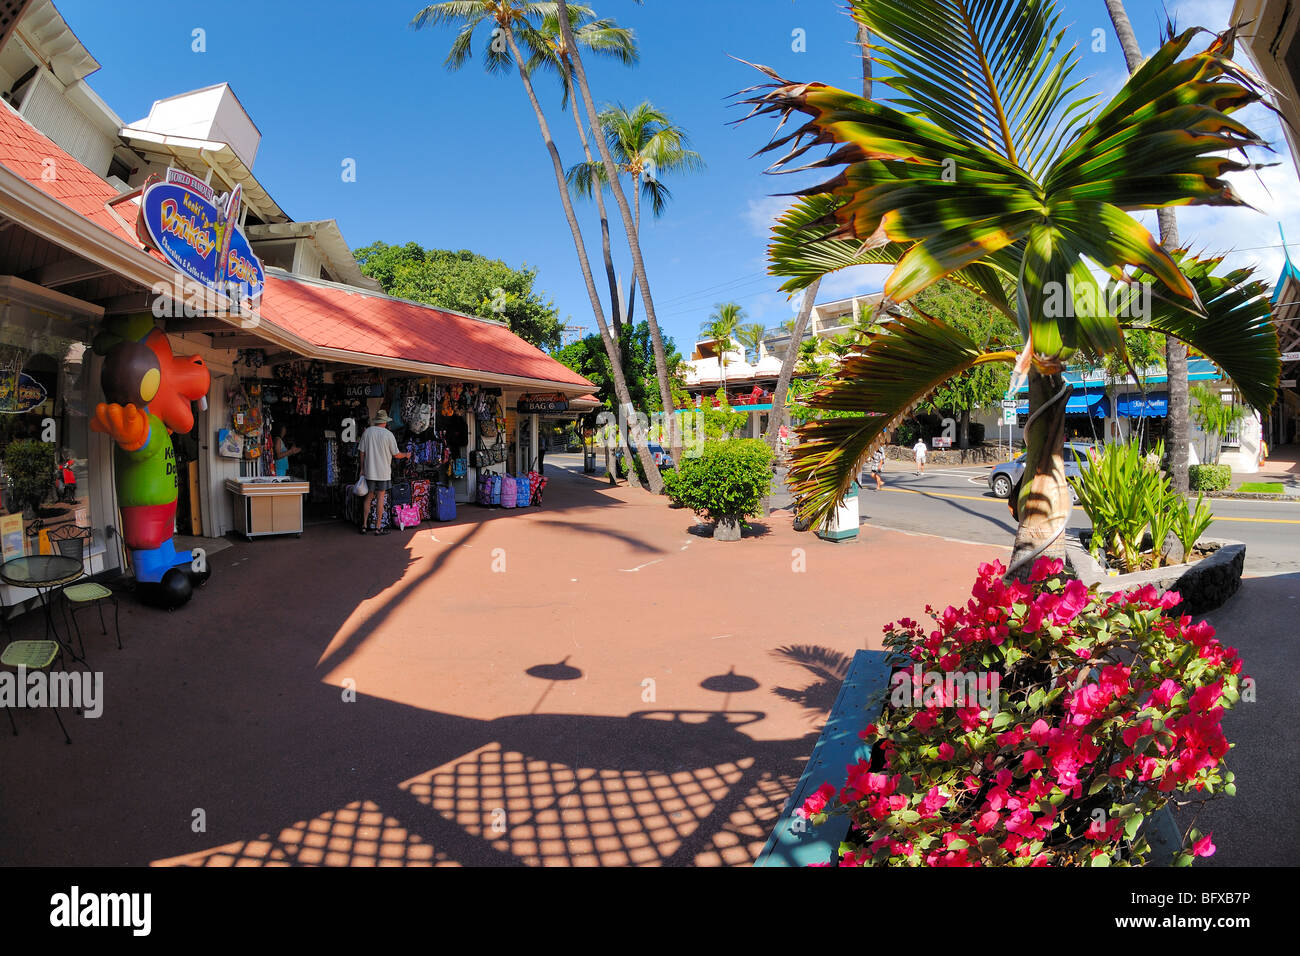 Kona Inn shopping village, Kailua Kona, The Big Island of Hawaii Stock Photo